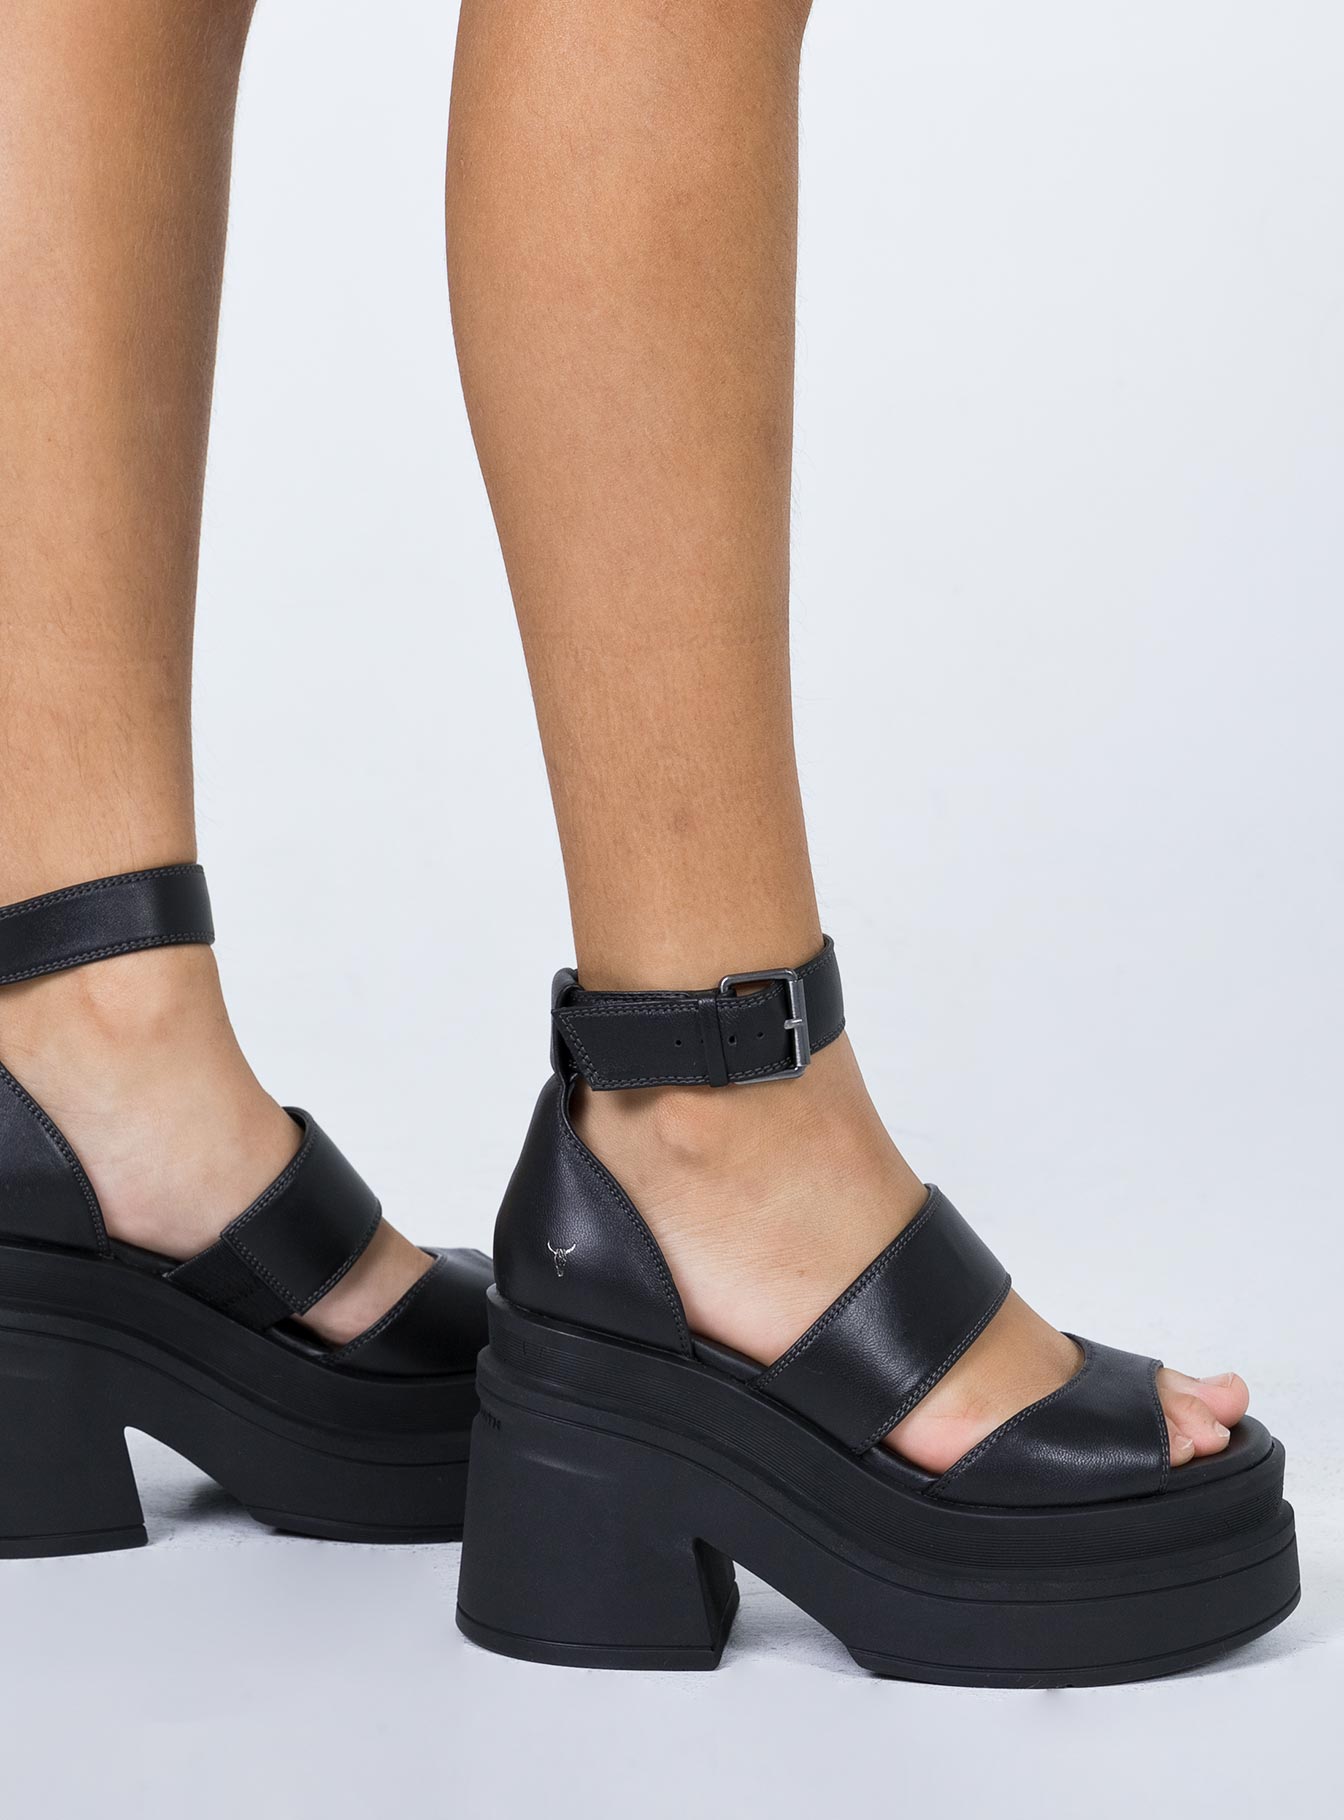 Catwalk Womens Clear Criss Cross Sandals Black Platform 4832C   Amazonin Shoes  Handbags